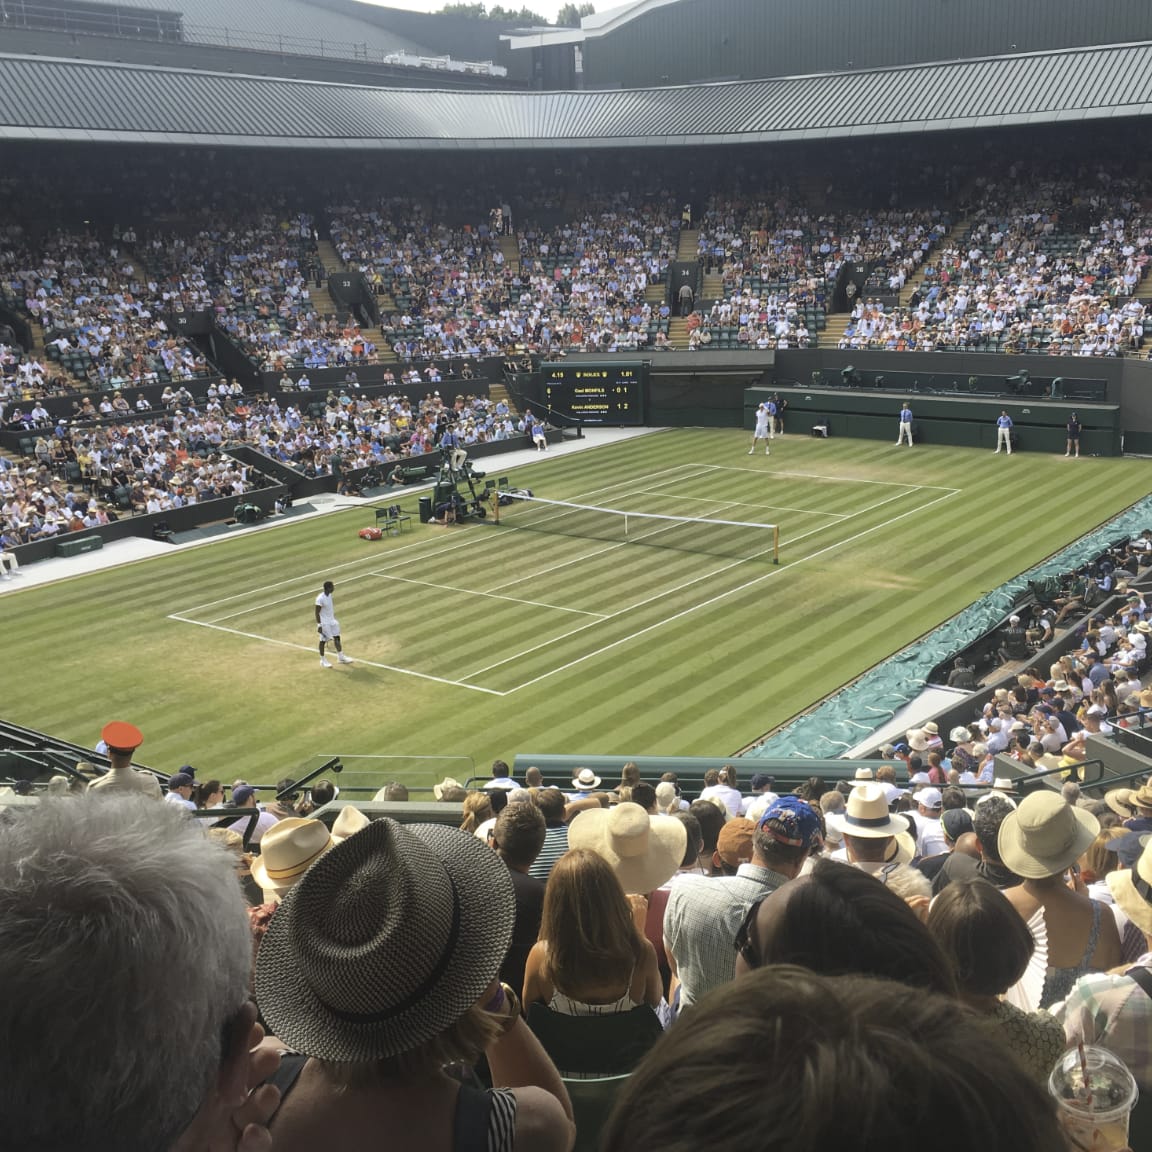 Tennis Match At Wimbledon